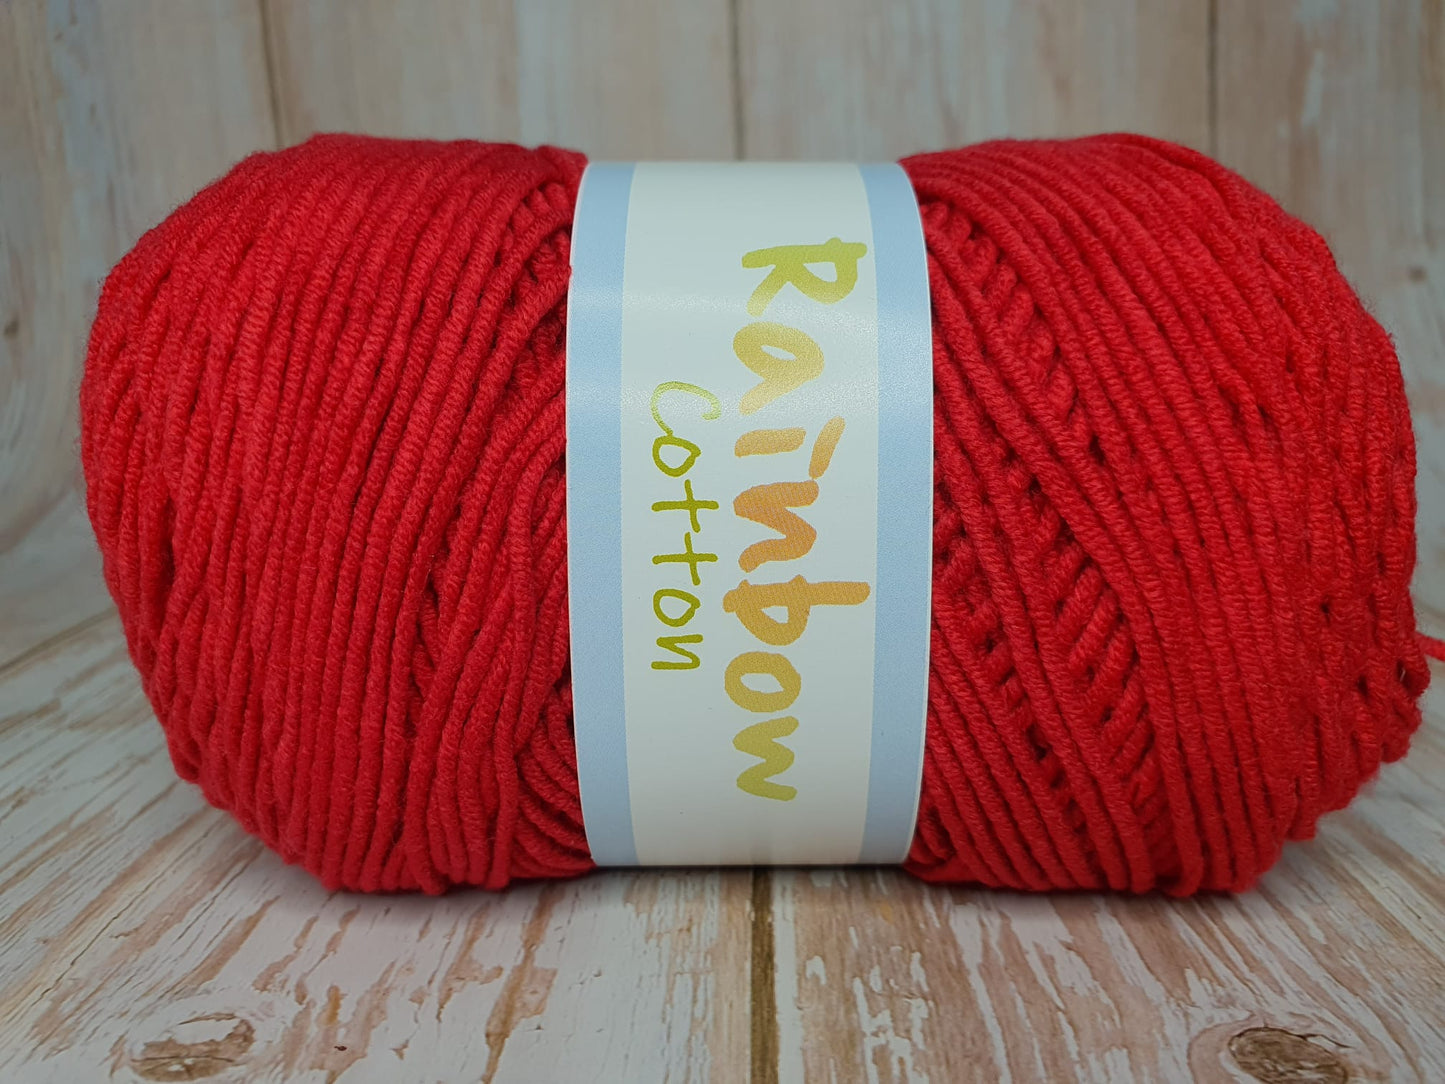 (Bulk Order Available) Rainbow Yarn Milk Cotton Yarn 5 ply Cake Gradient & Solid Color 100g